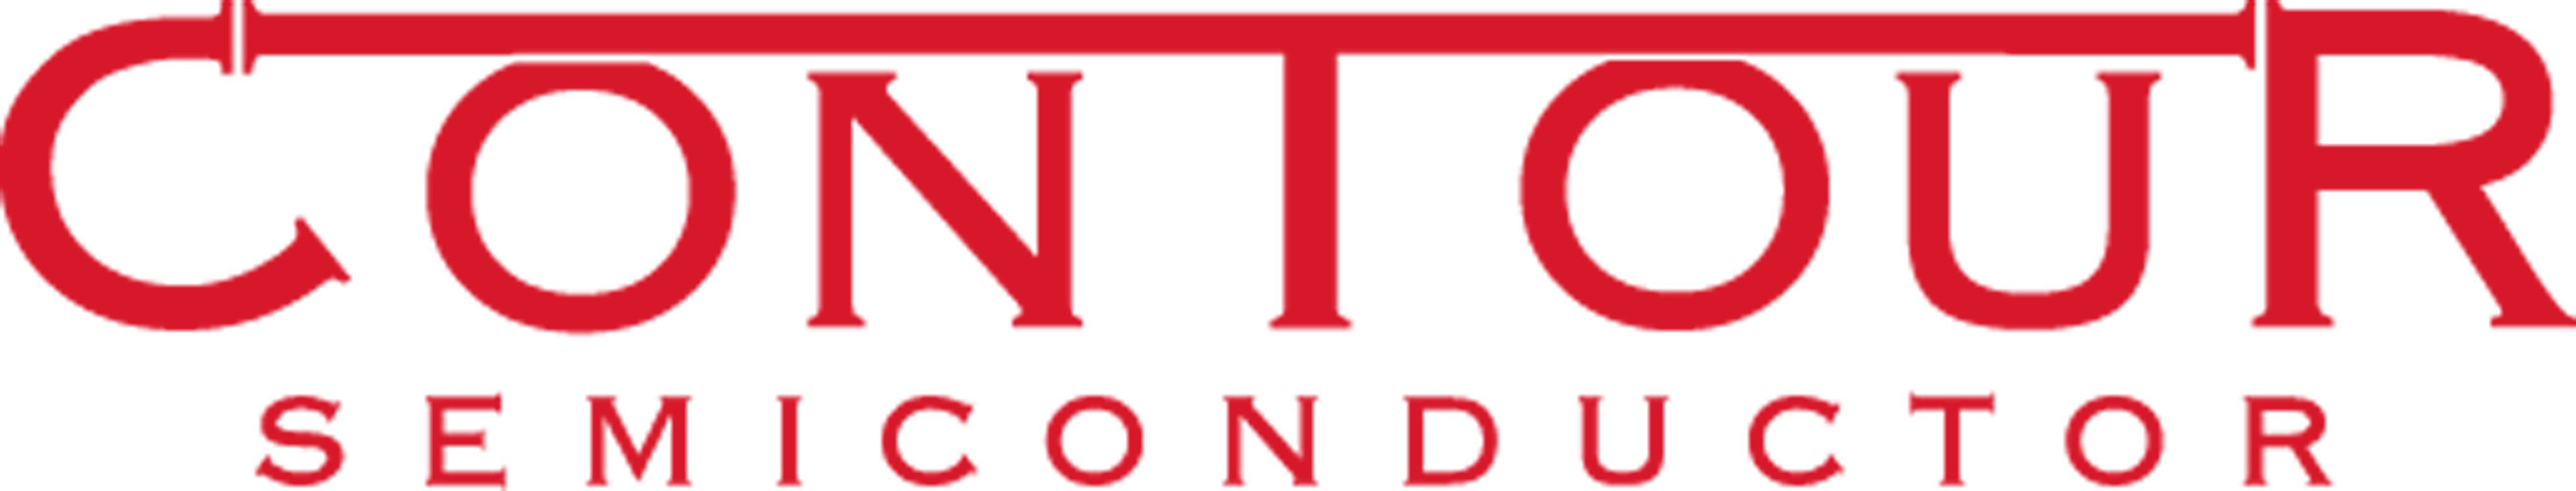 Contour Semiconductor, Inc. logo (PRNewsFoto/Contour Semiconductor, Inc.) (PRNewsFoto/Contour Semiconductor, Inc.)